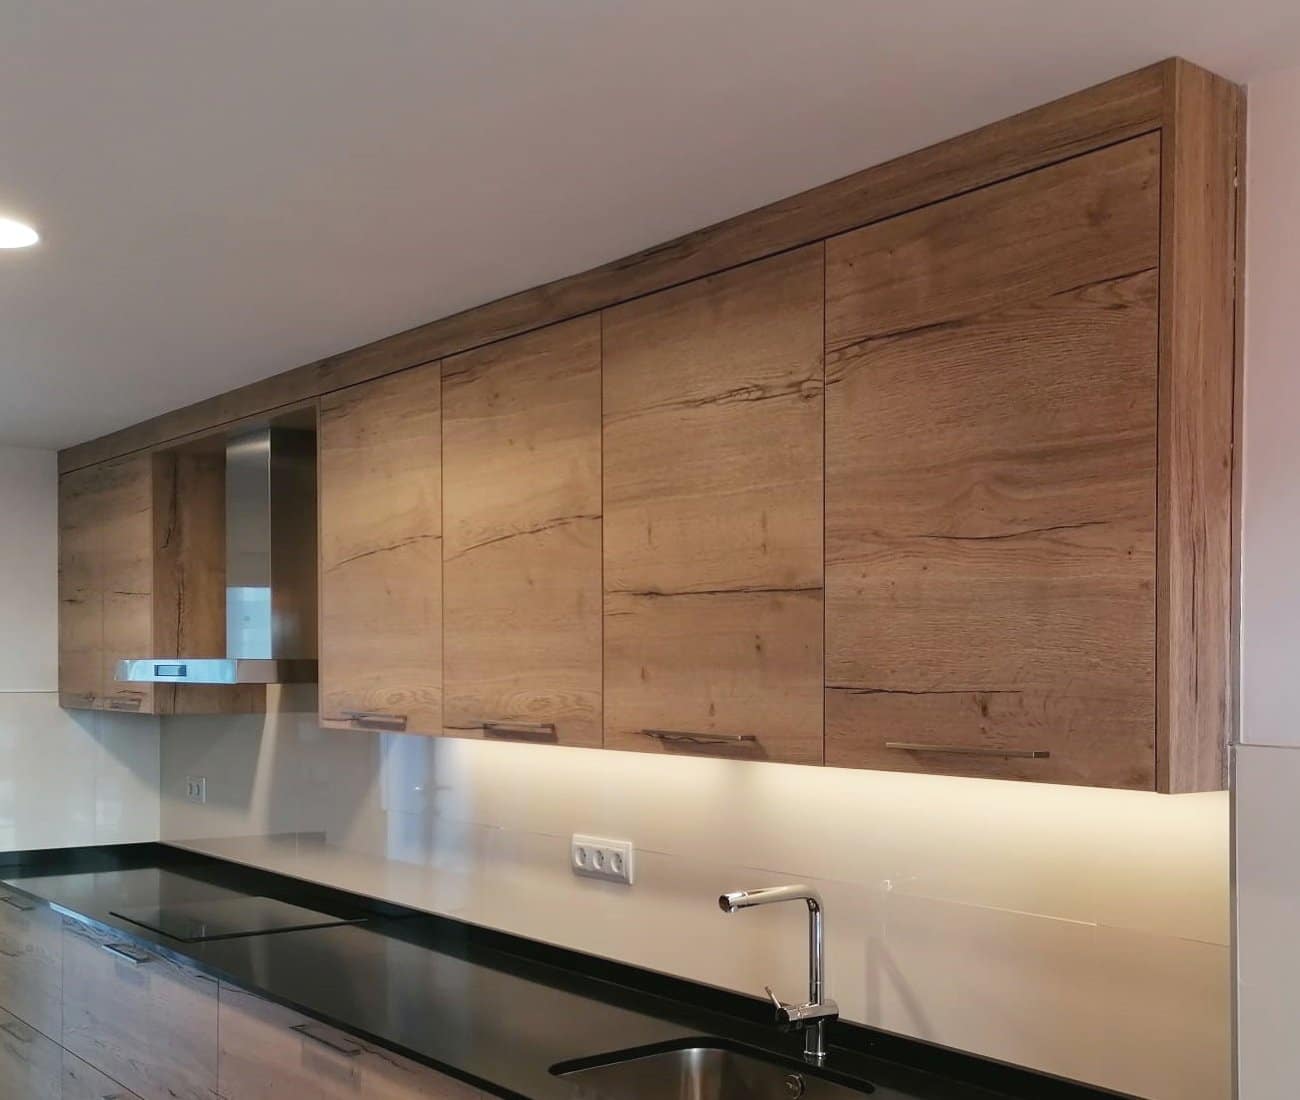 Detalle de muebles altos con LED inferios en una cocina clasica en madera con tirador